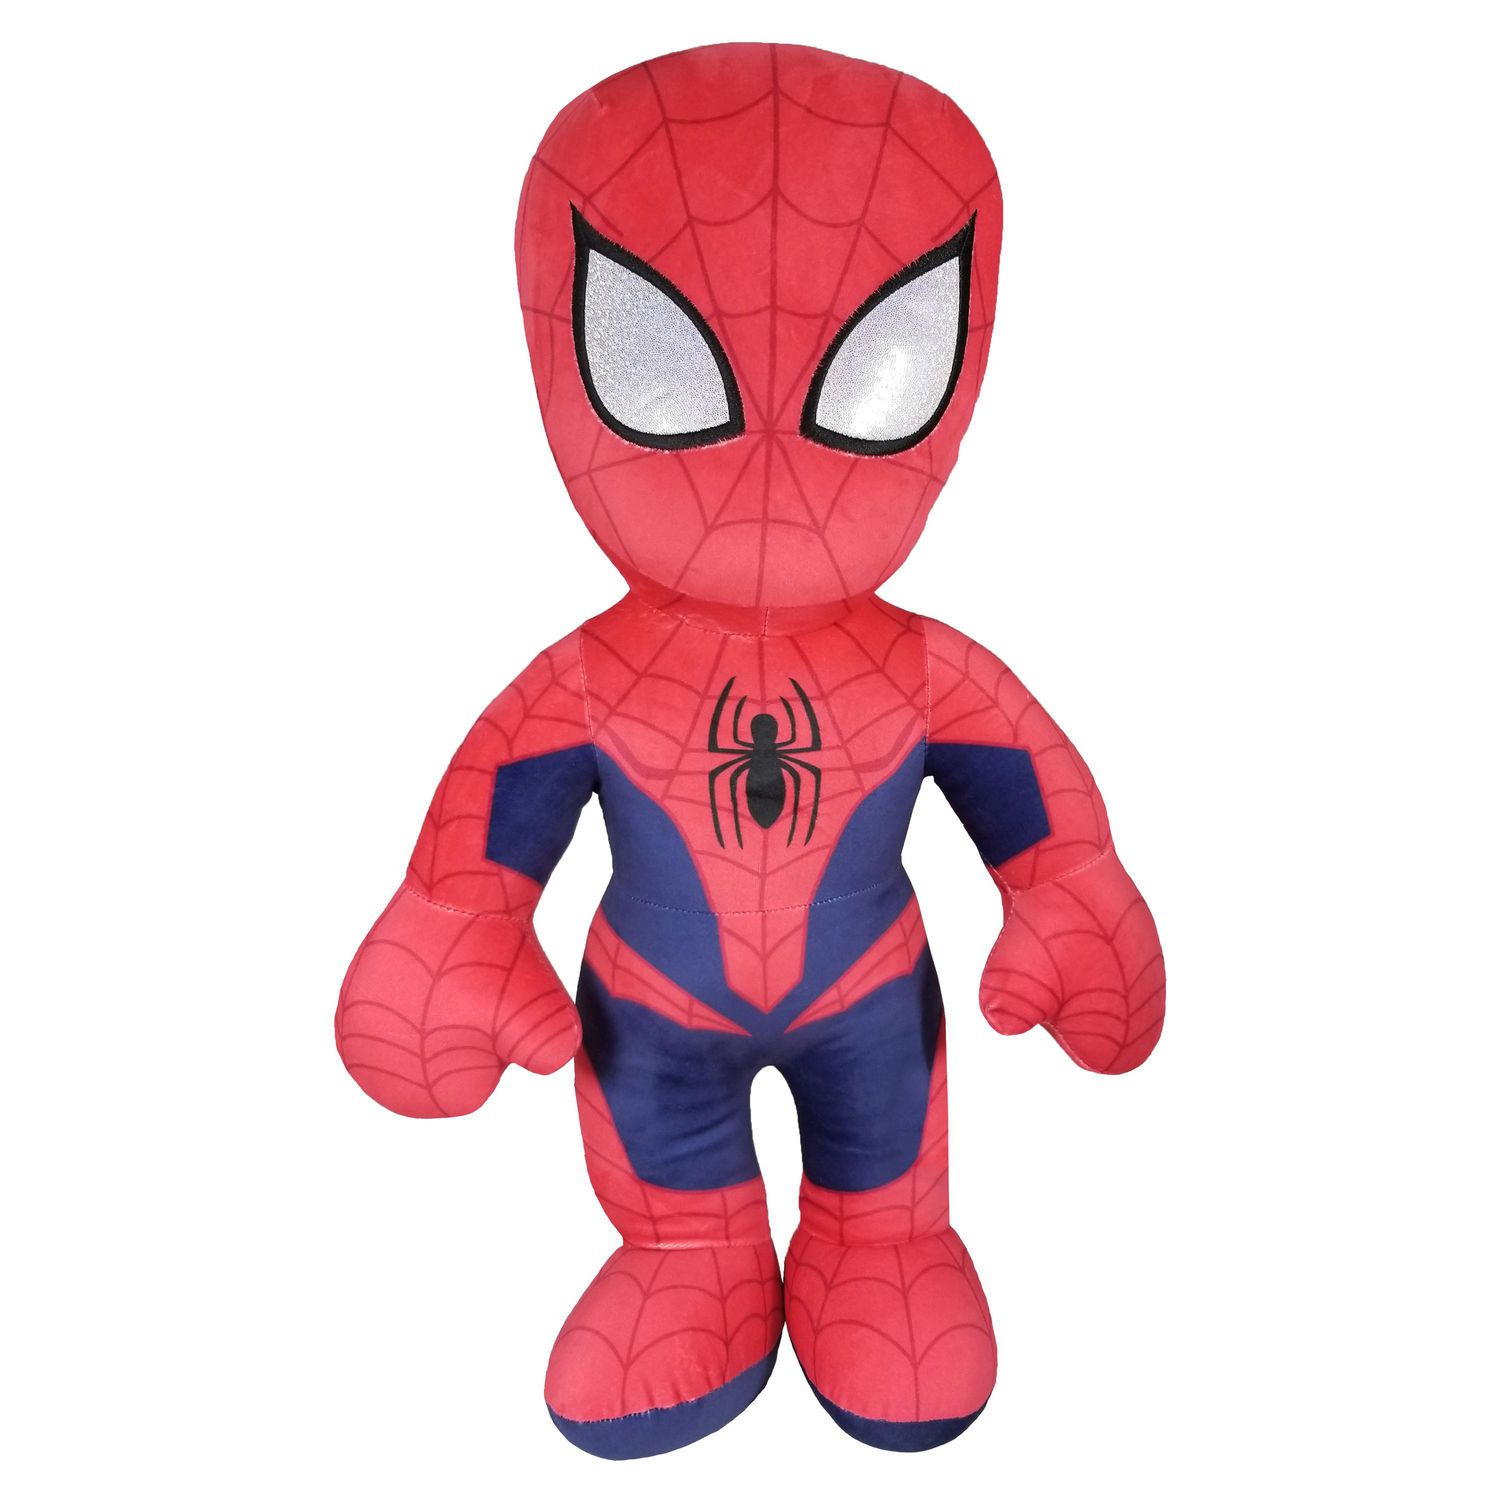 Large spiderman plush toy